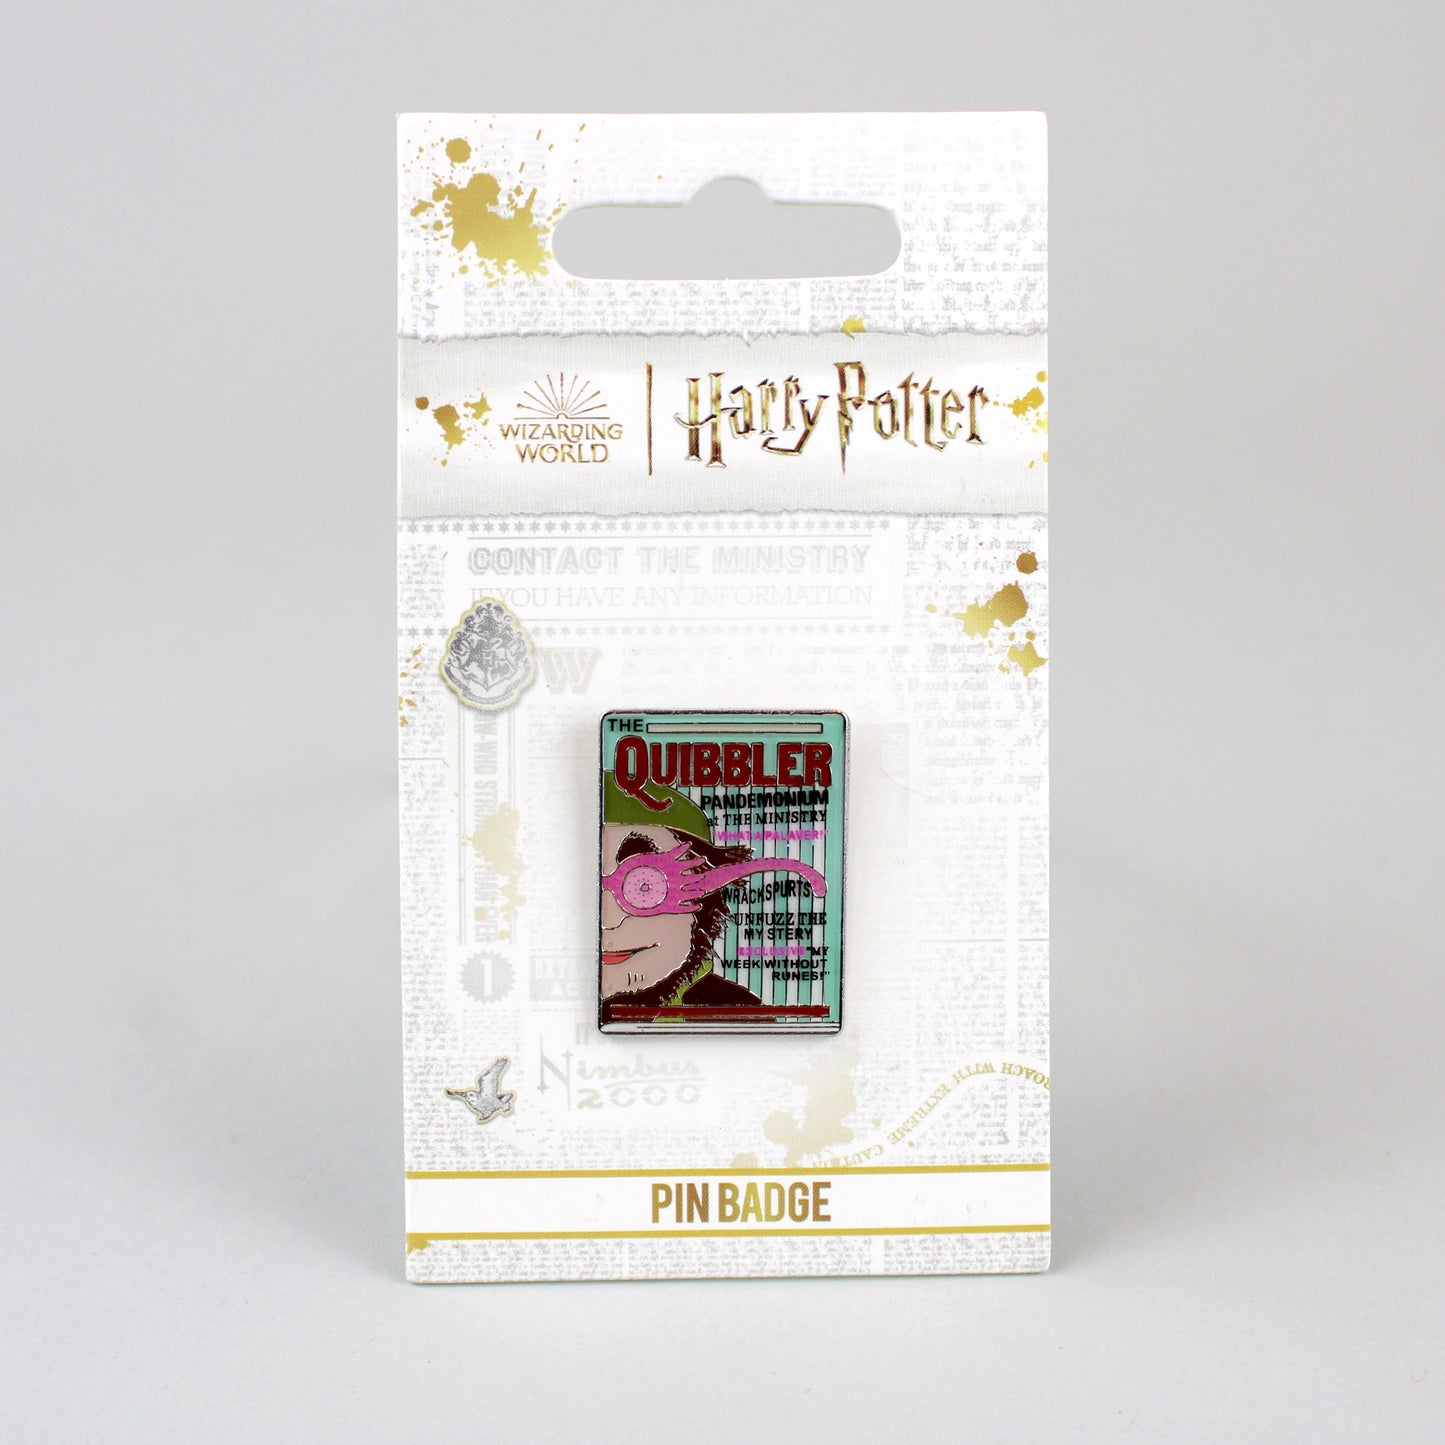 The Quibbler (Harry Potter) Enamel Pin